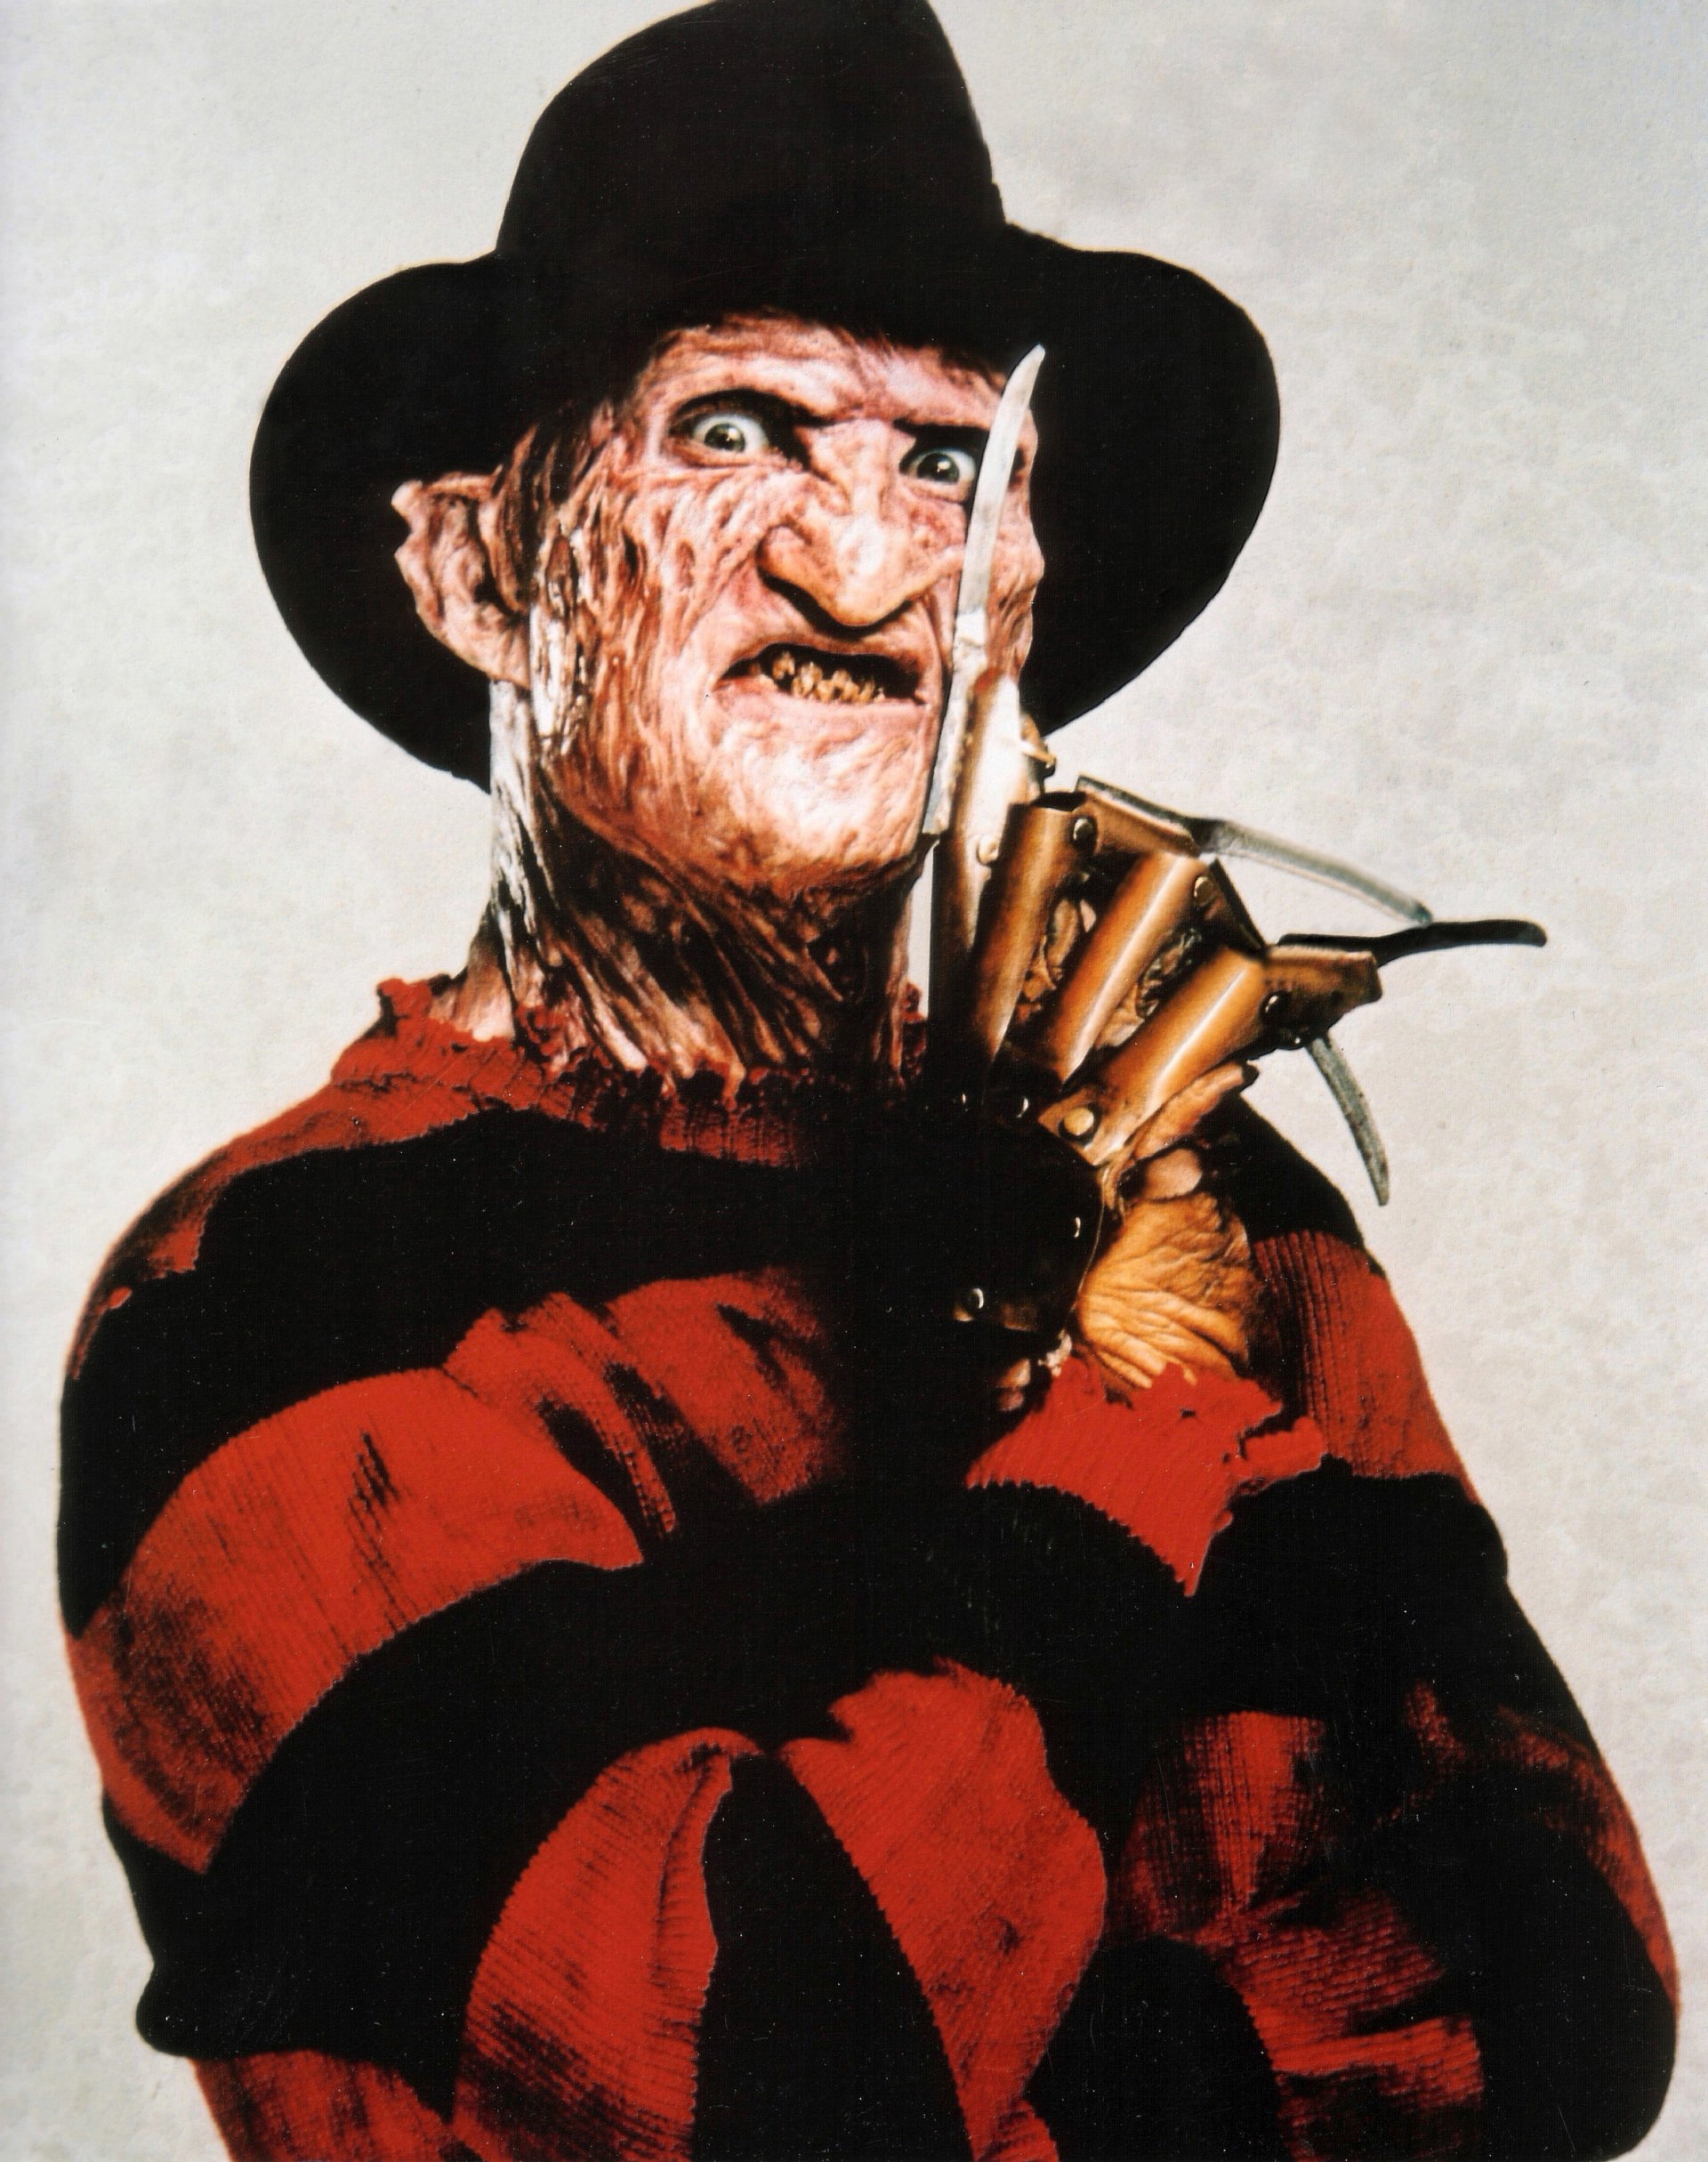 Freddy Krueger movie A Nightmare on Elm Street (1984) Image